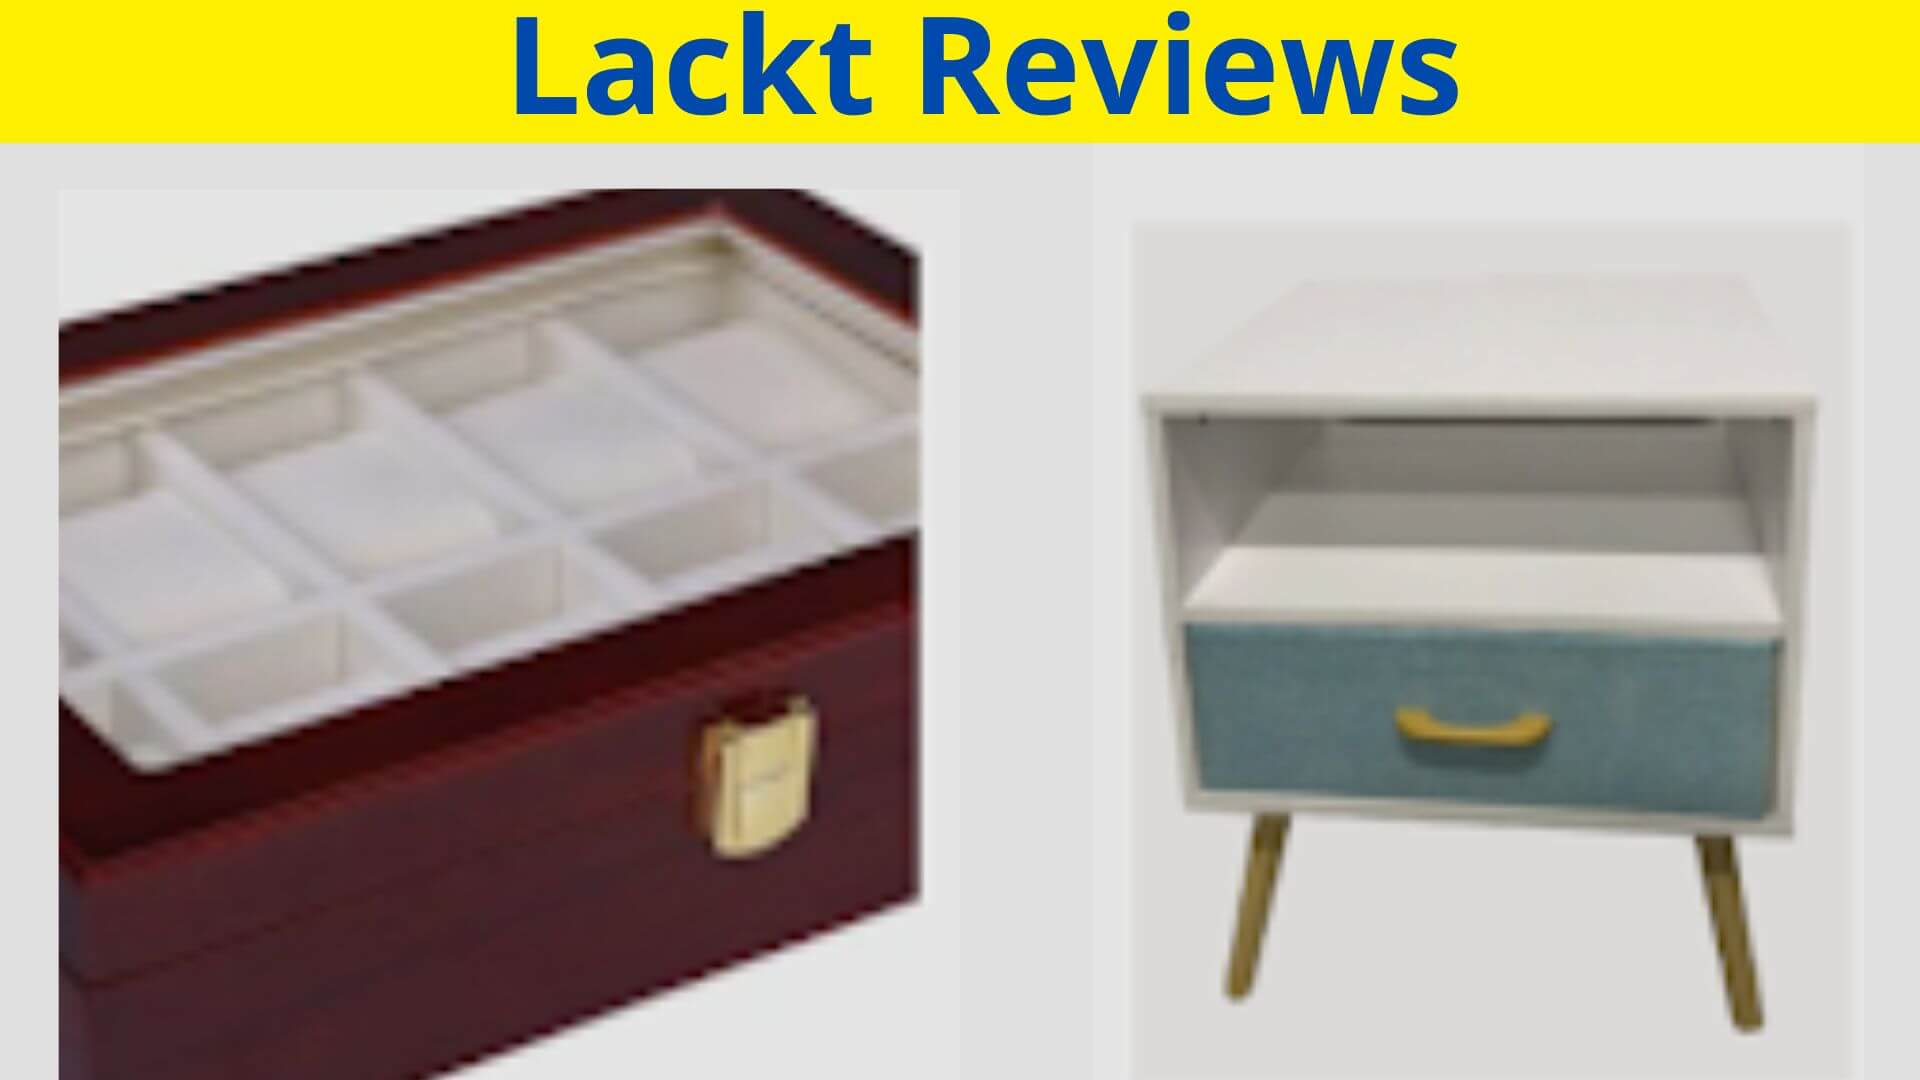 Lackt Reviews